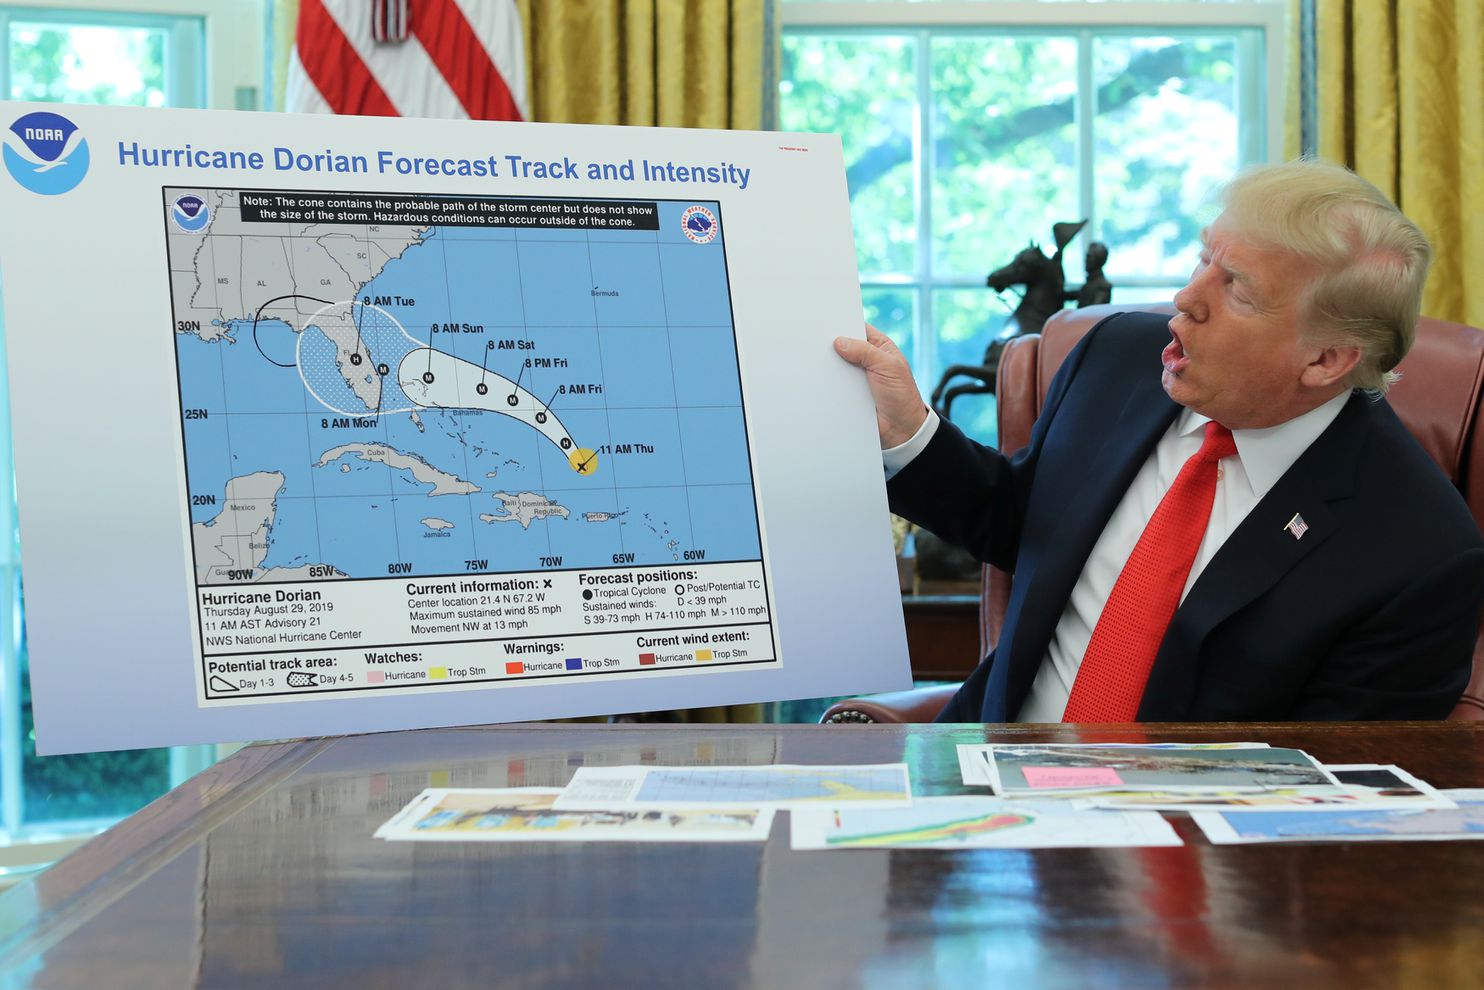 Trump "extrapolating" a hurricane path